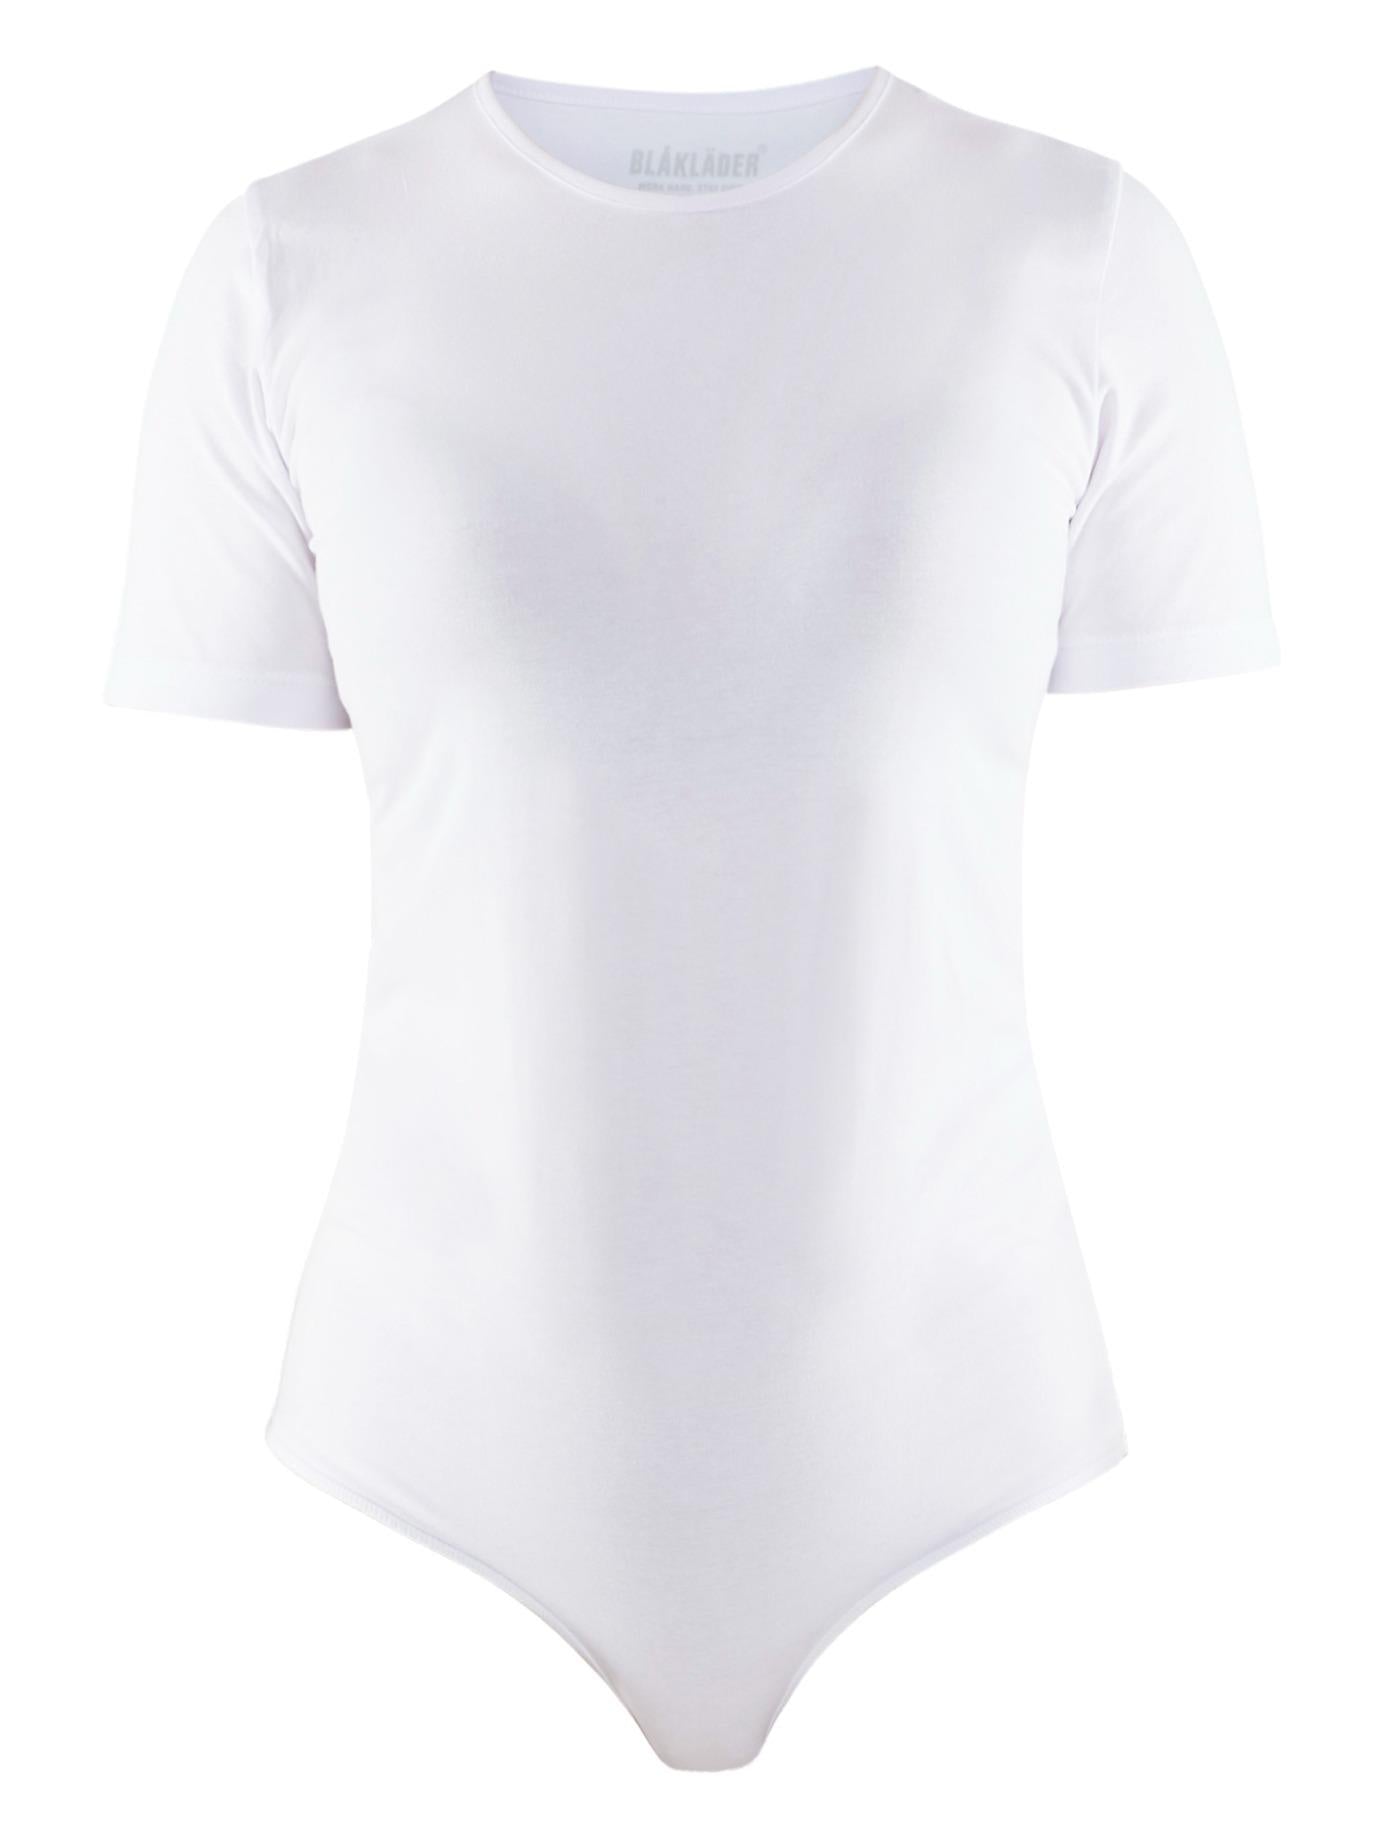 Blaklader white stretch cotton women's short-sleeve bodysuit #3404